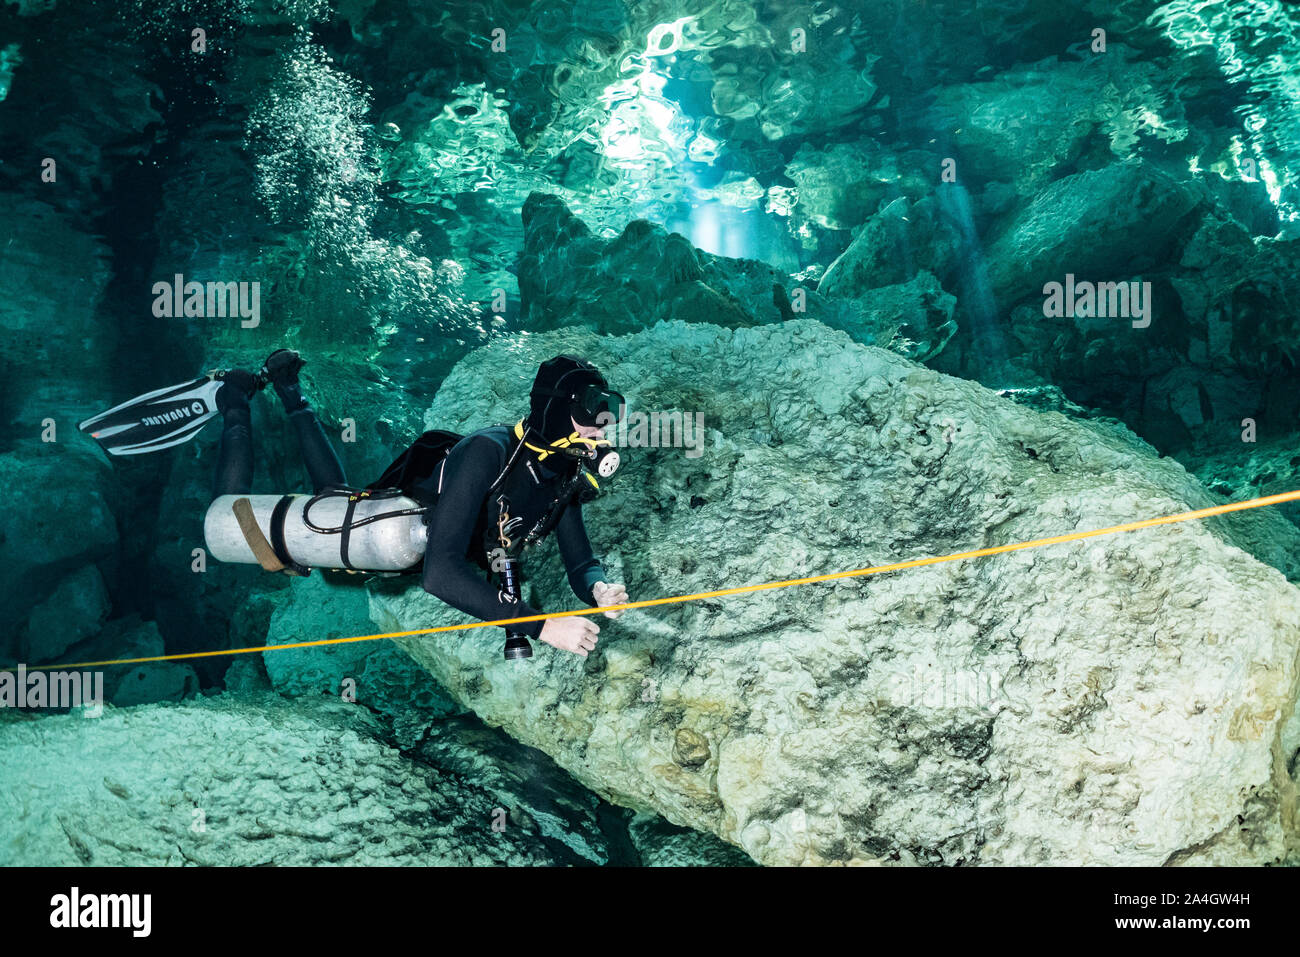 A scuba diver explores the cave passages of Mexico's famed Dos Ojos cenote. Stock Photo